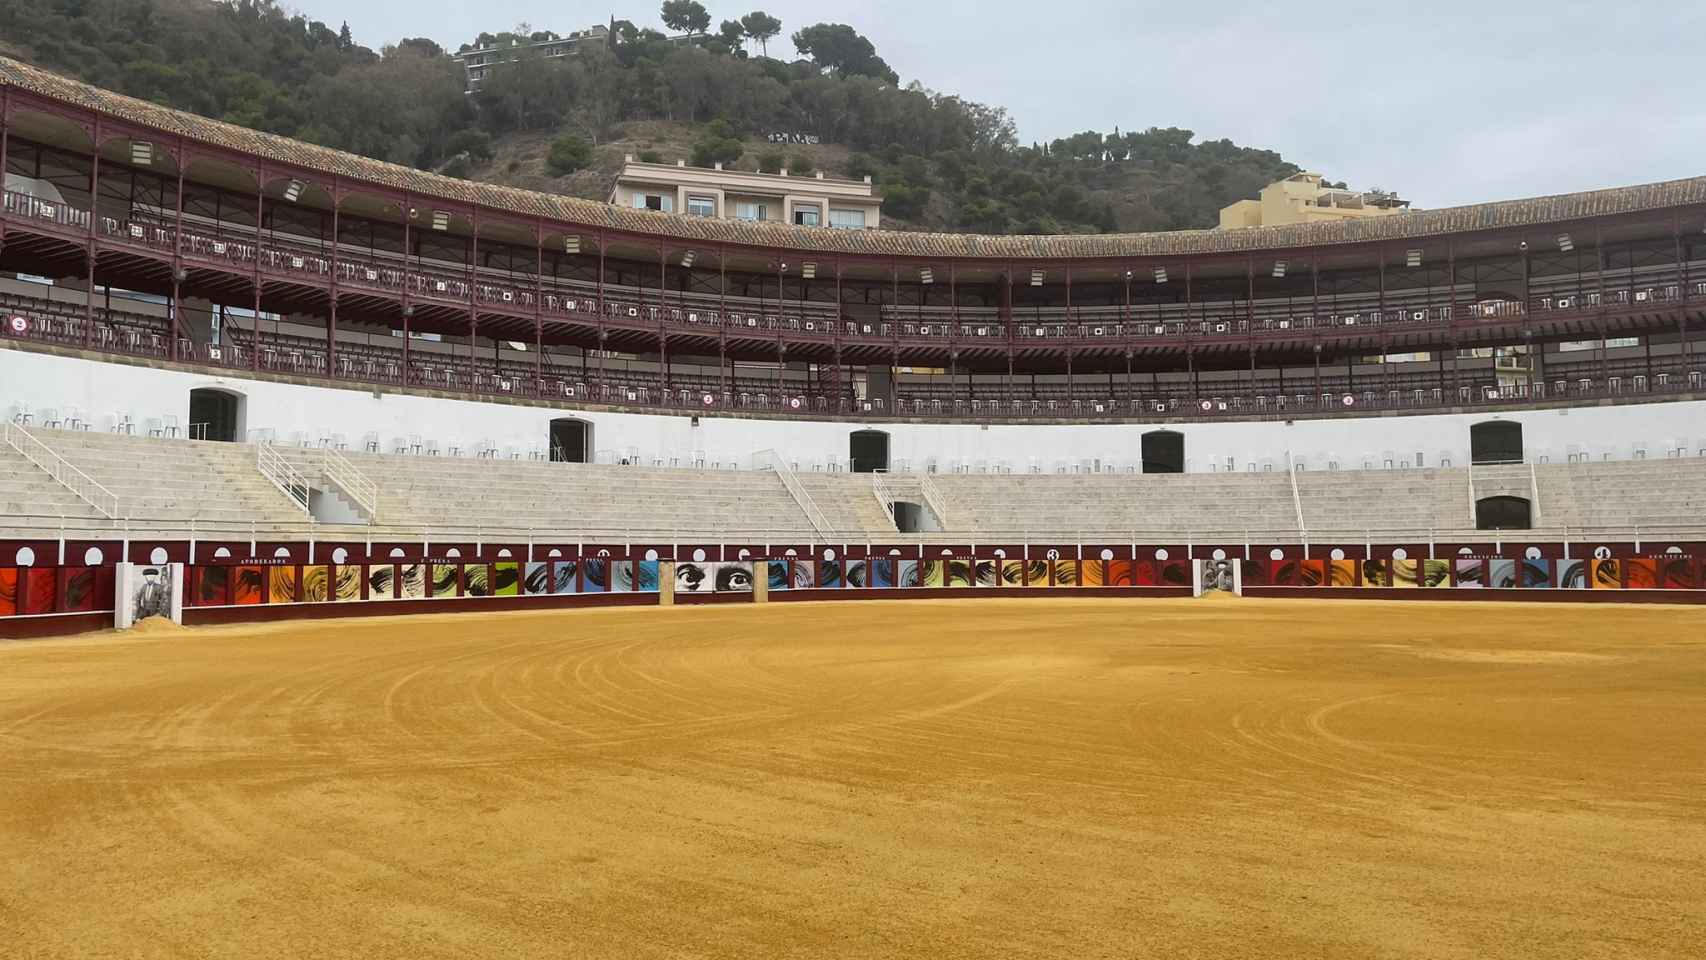 La plaza de toros de La Malagueta, durante una corrida picassiana.